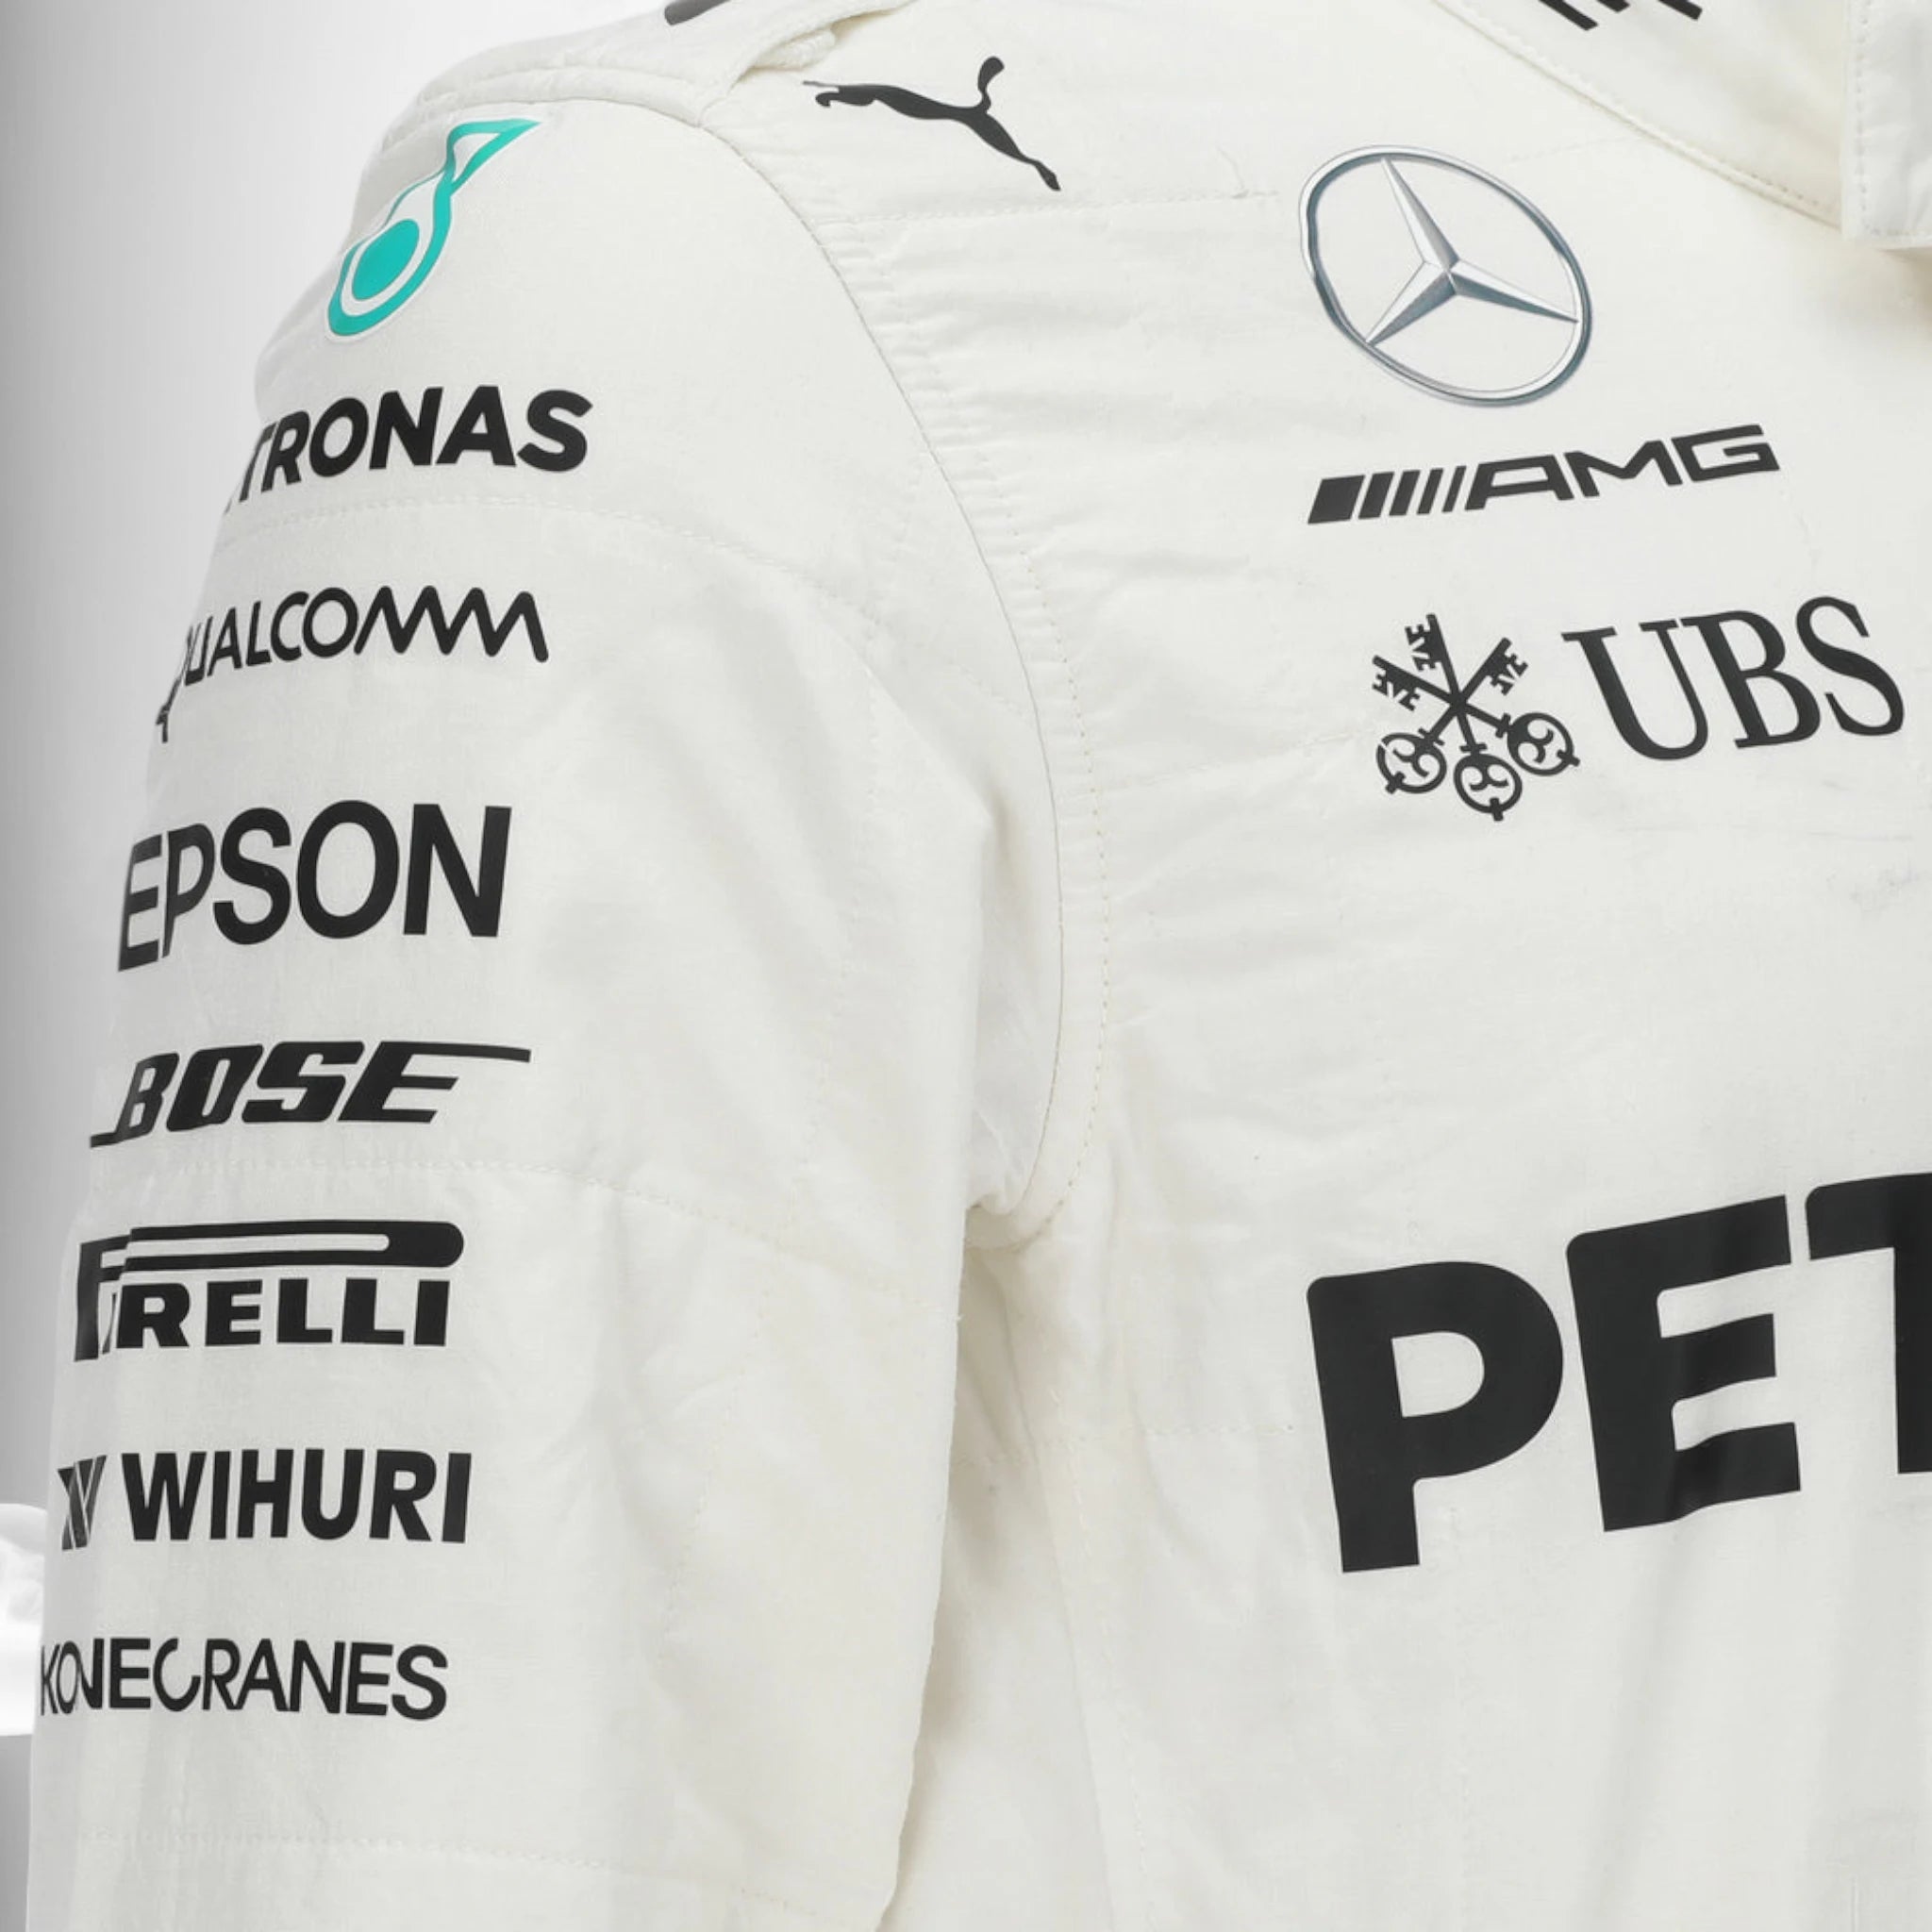 2017 Valtteri Bottas Mercedes-AMG Petronas F1 Team Race Suit - Mexico GP